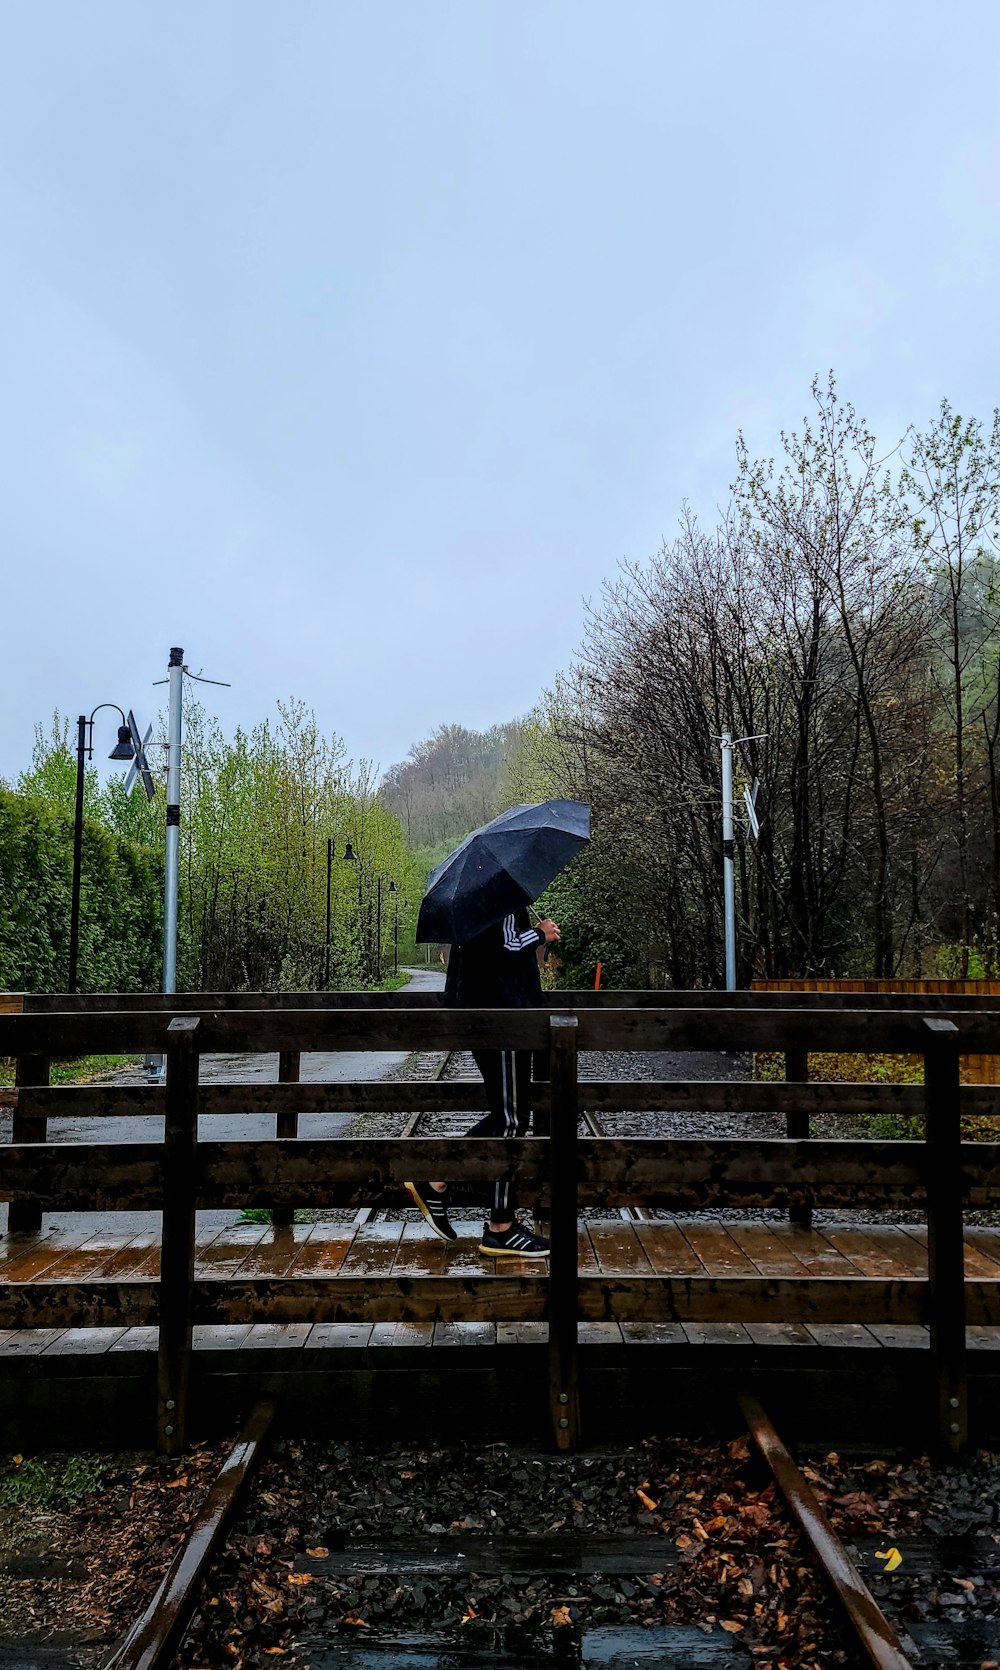 a person standing on a bridge holding an umbrella